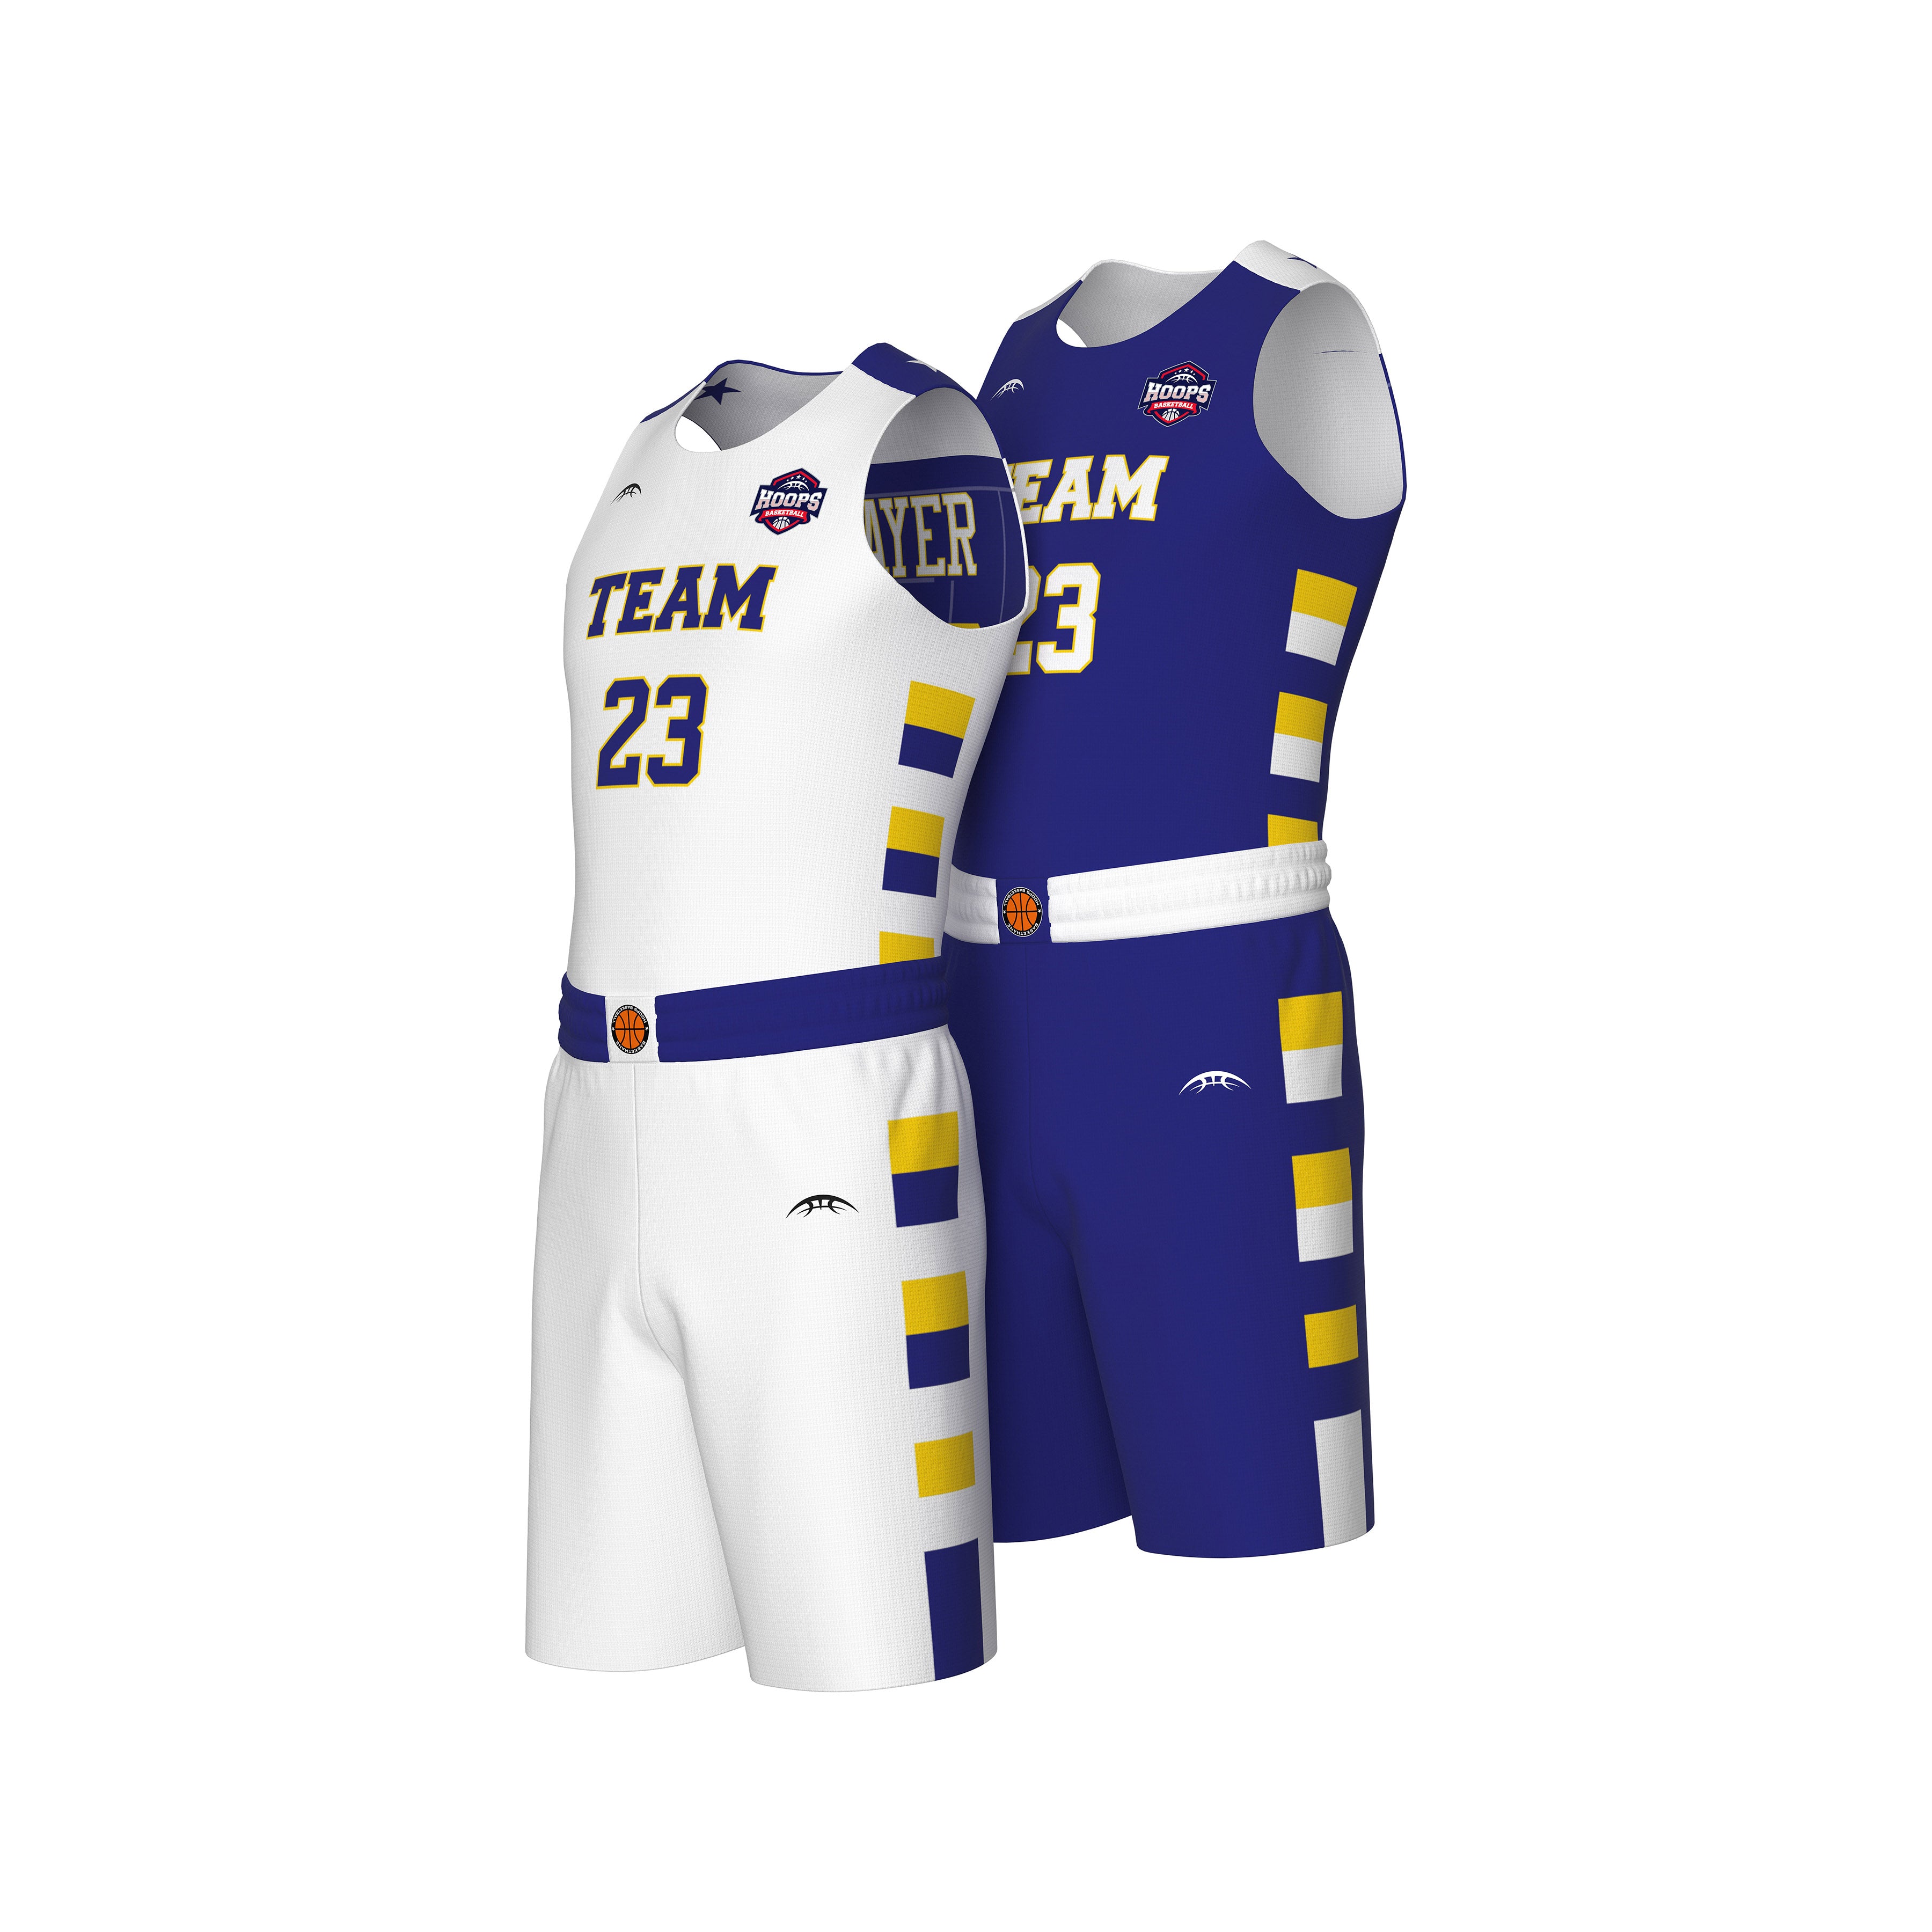 Custom Basketball Uniform - Reversible